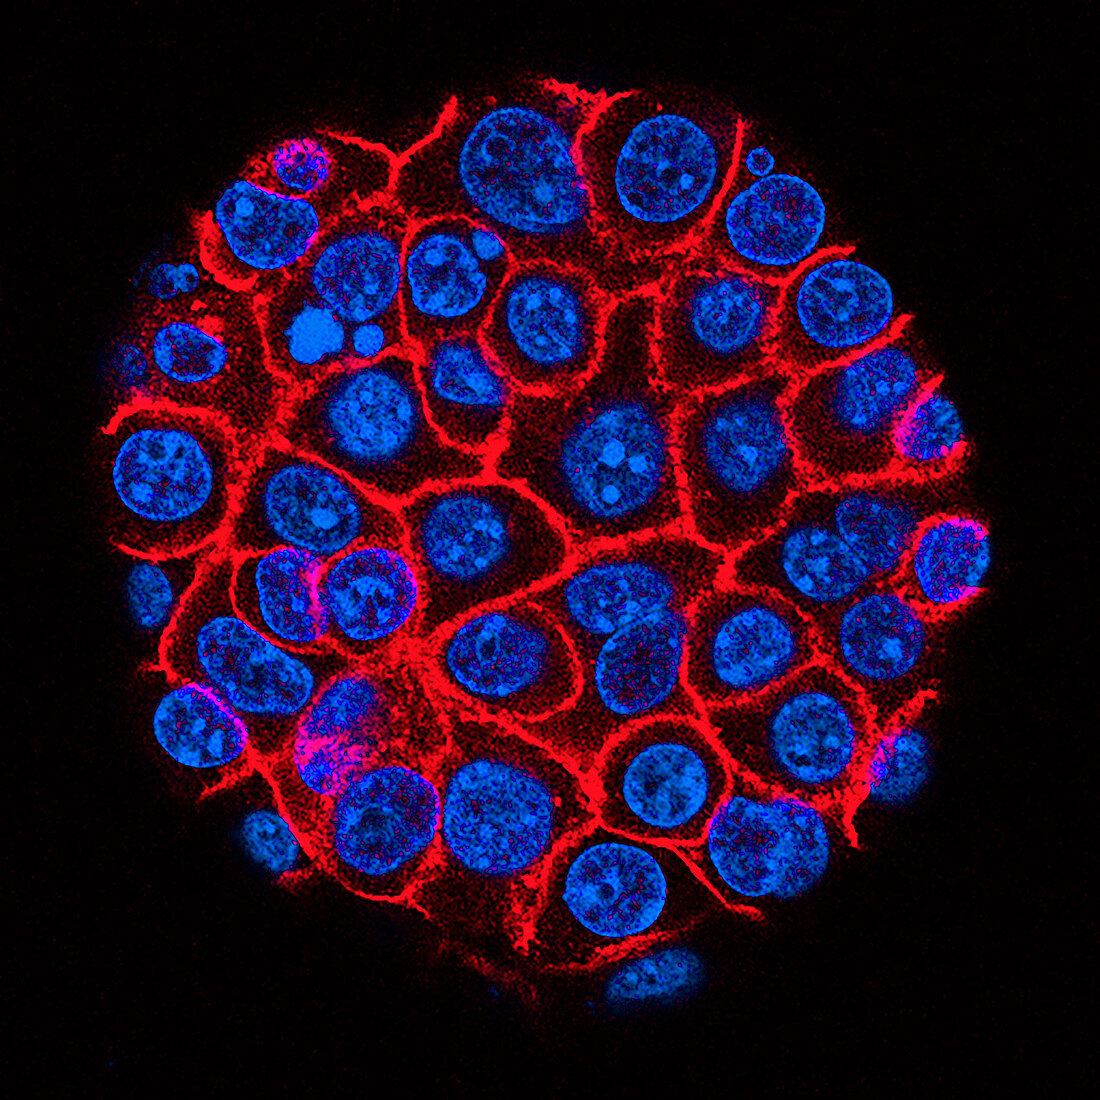 Pancreatic cancer cells, light micrograph